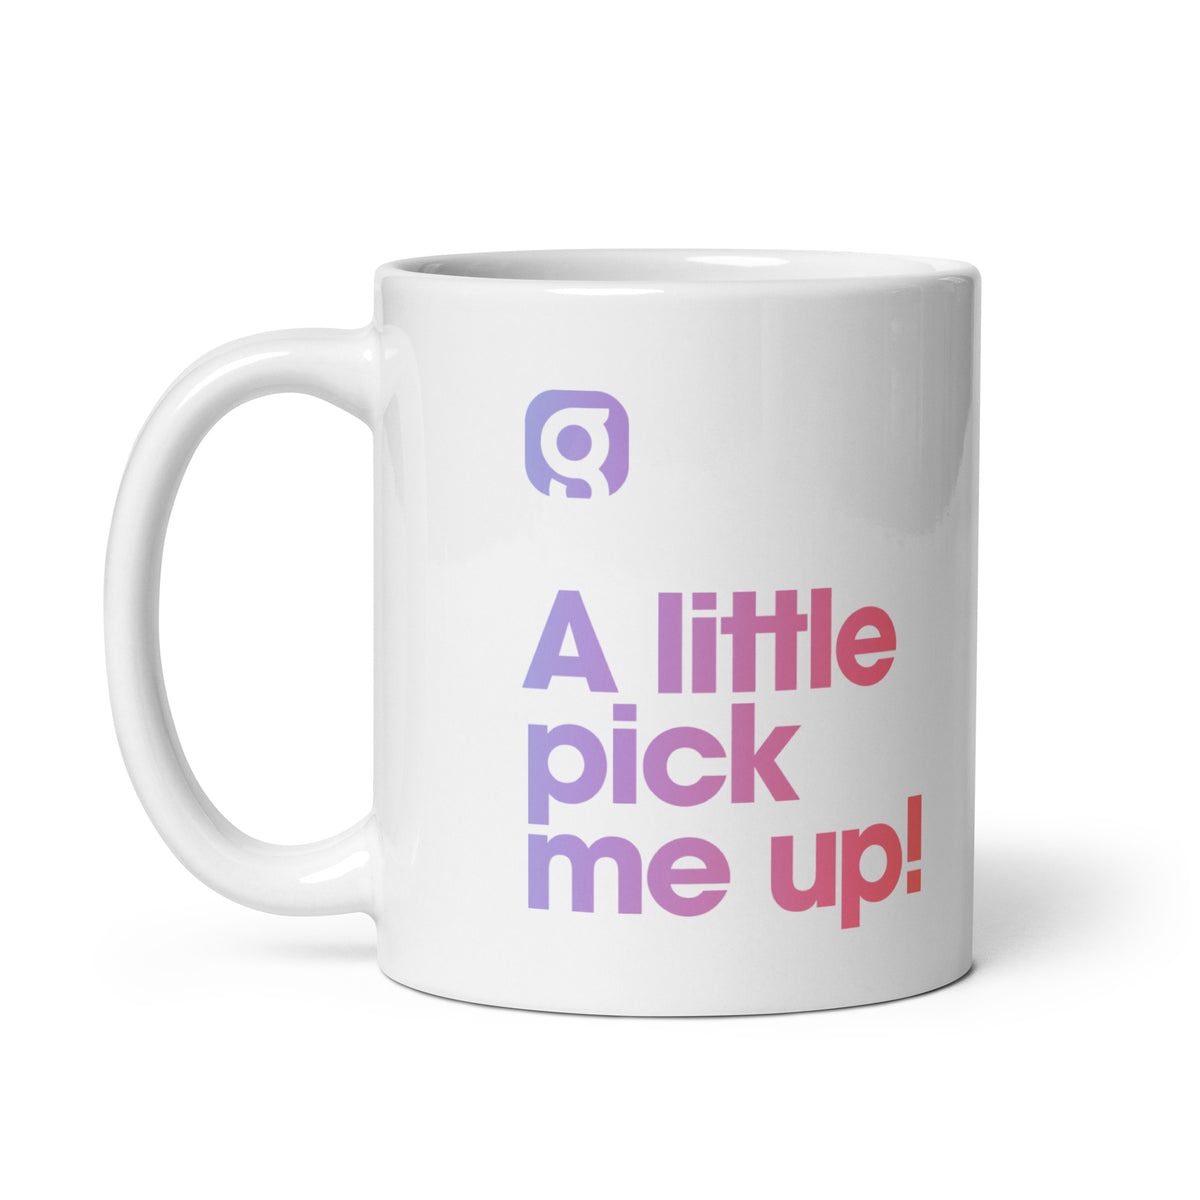 A little Pick Me Up! Mug - White